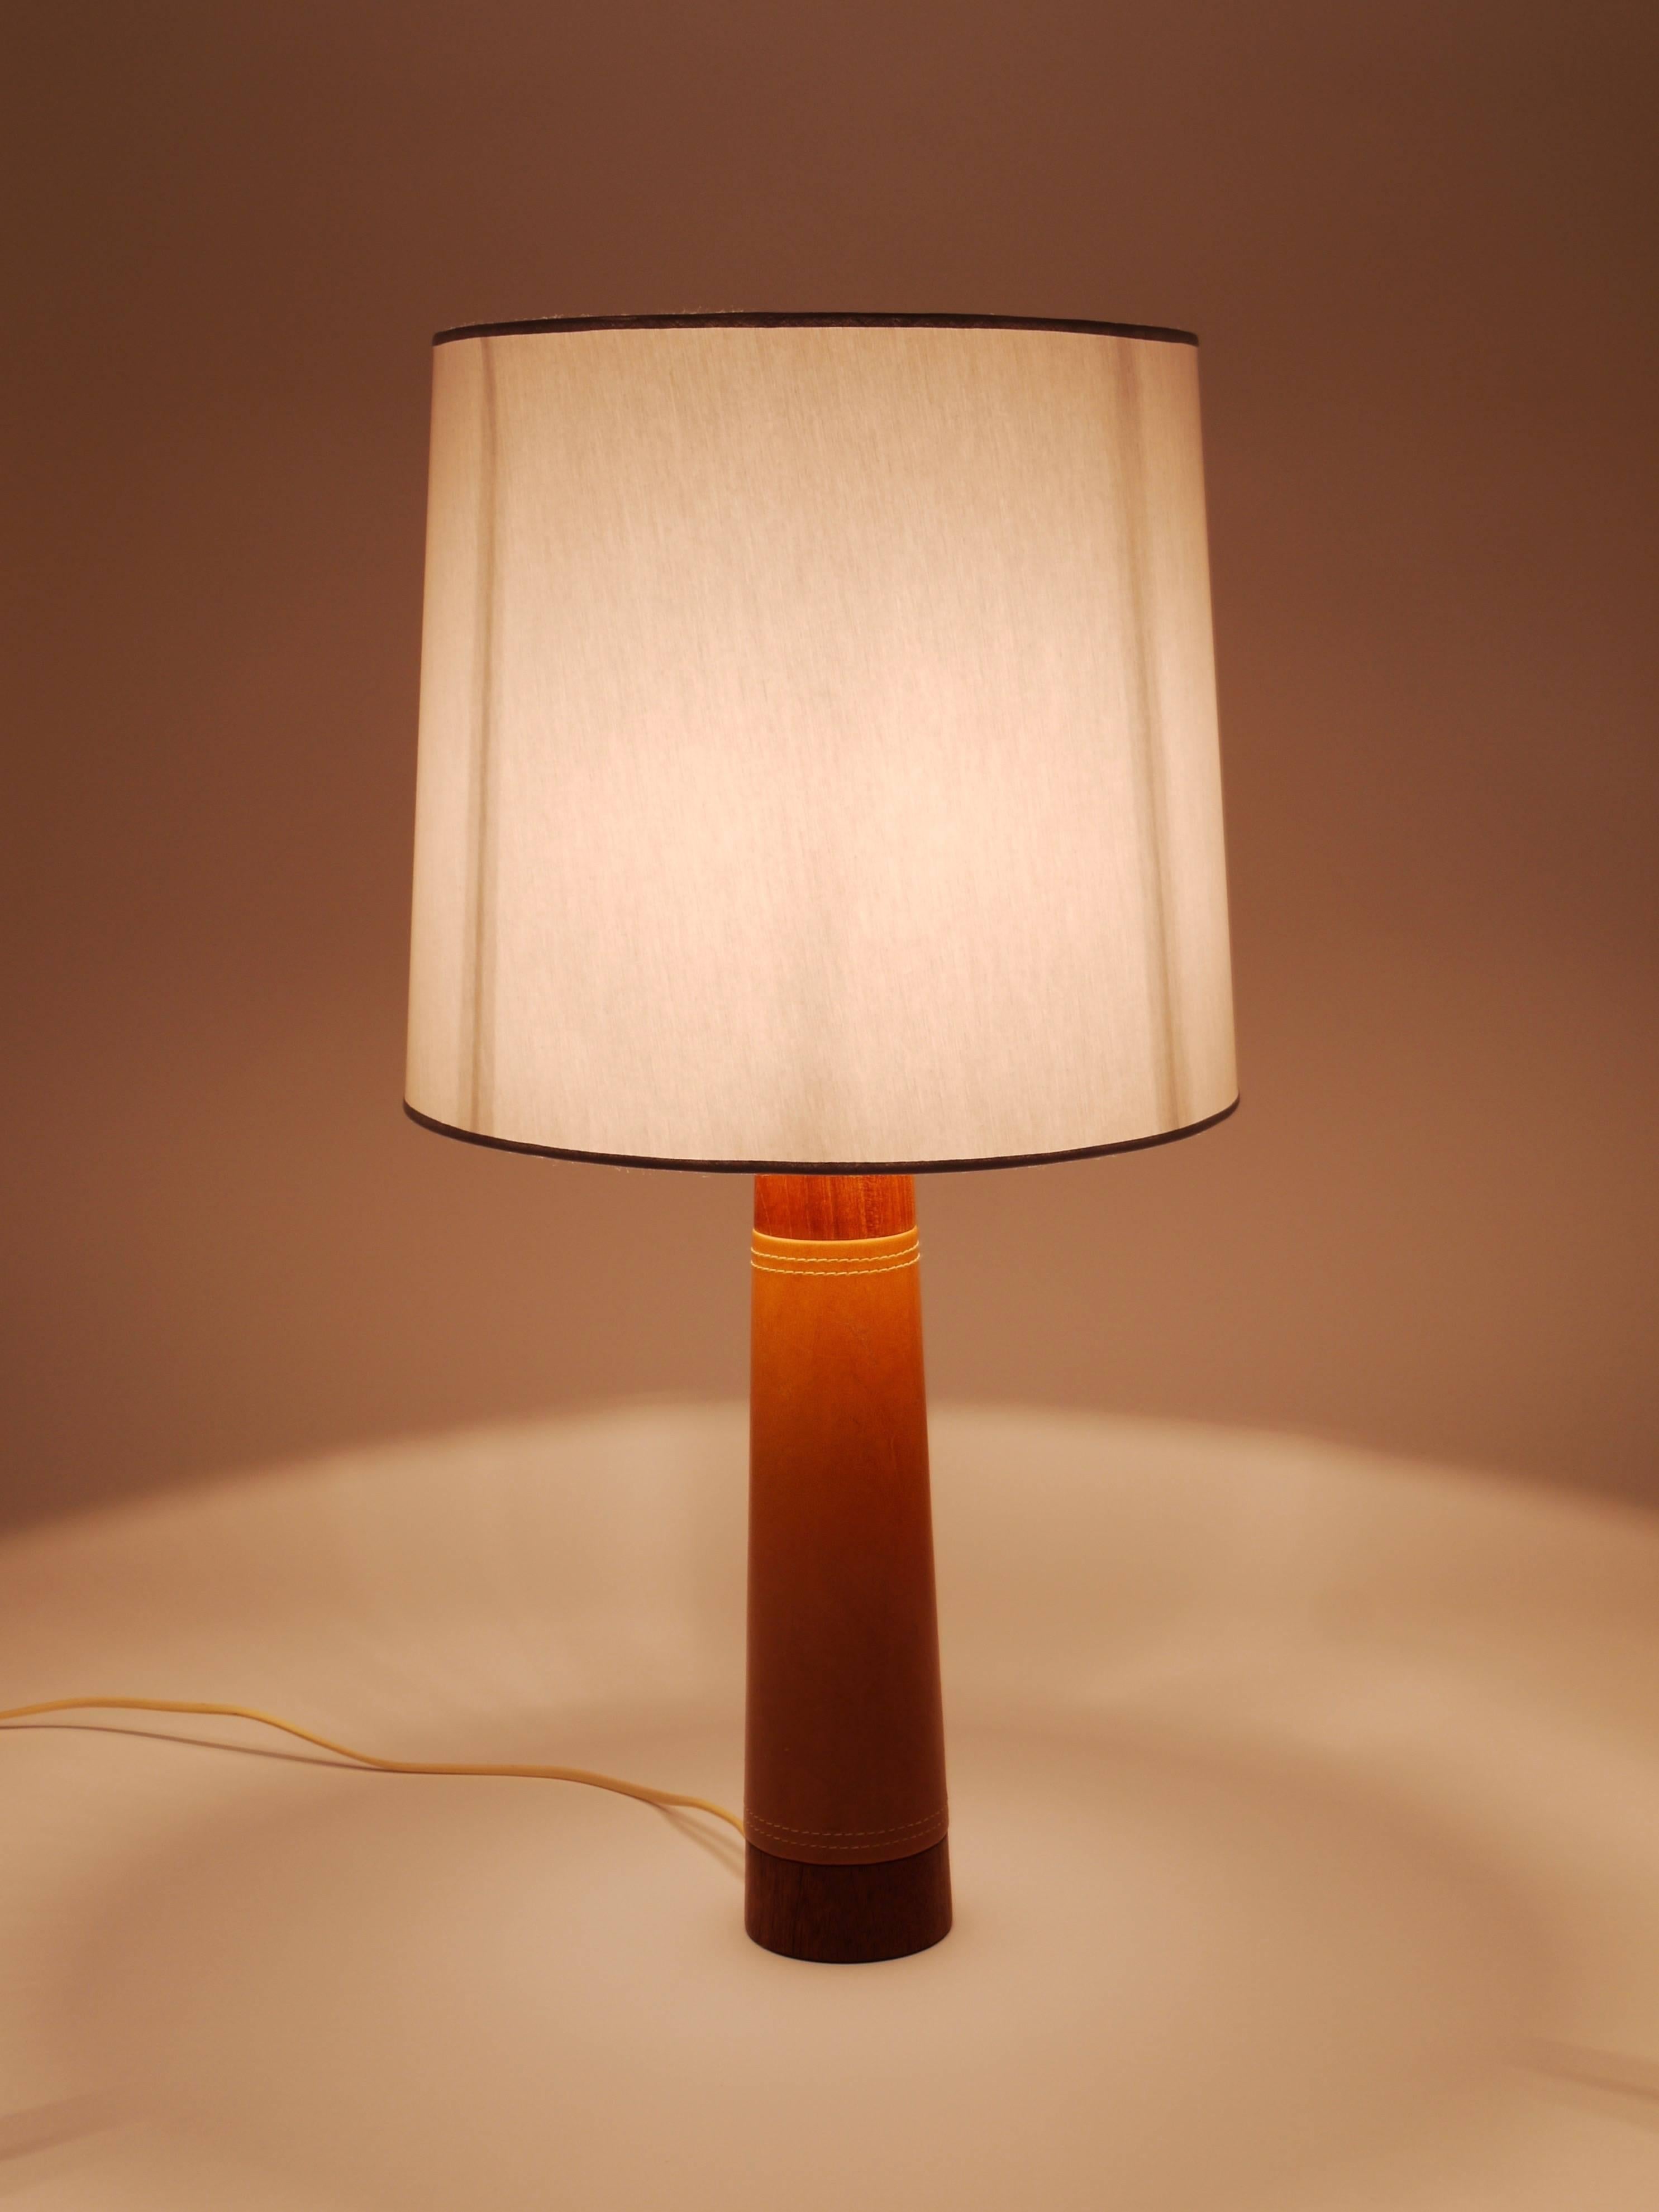 Beautiful Danish Midcentury Teak Leather Table Lamp, Denmark, 1950s For Sale 4